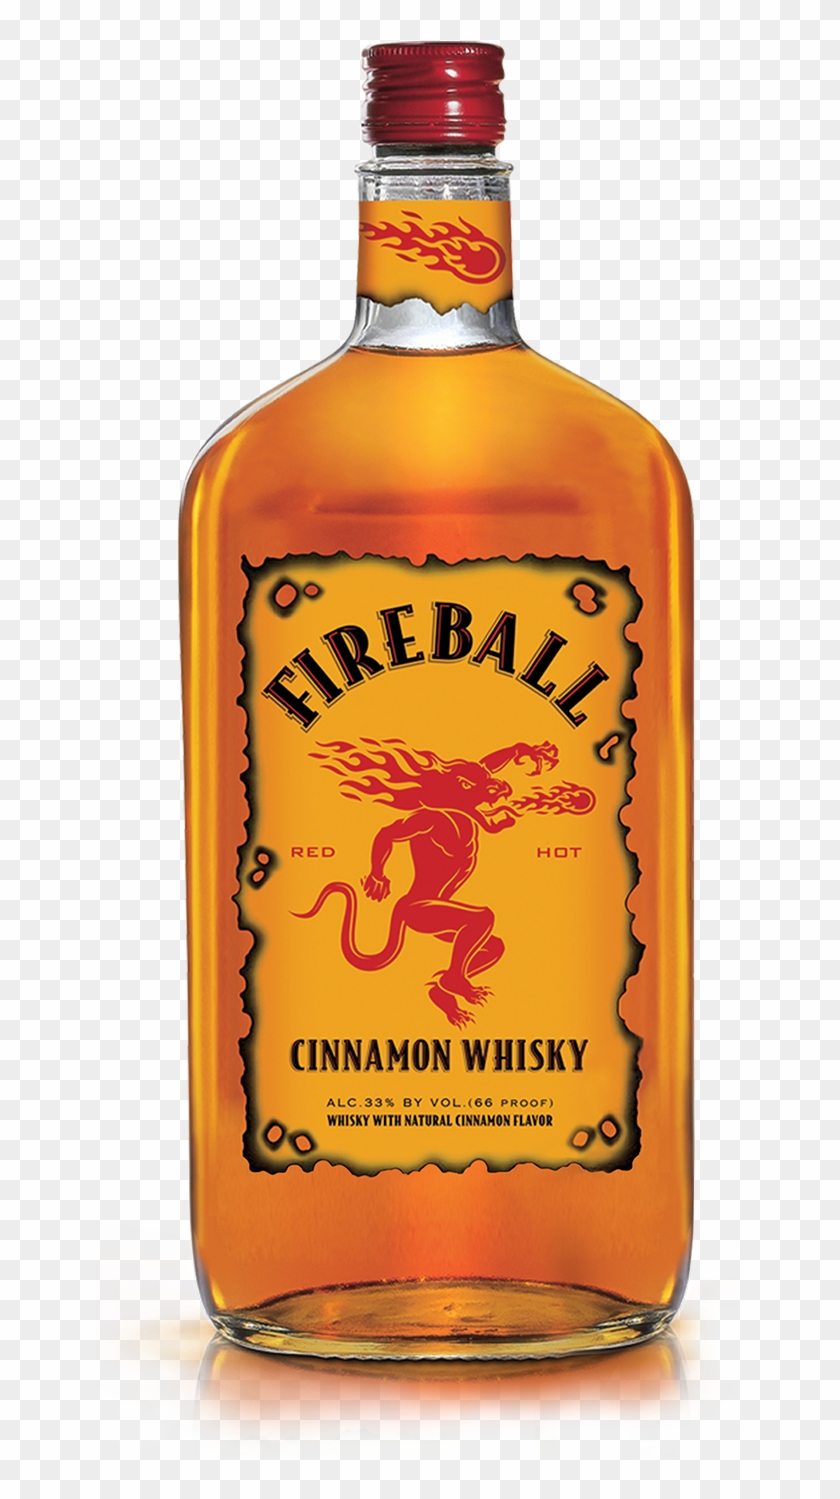 Fireball Whisky Bottle On A Transparent Background - Whisky Fireball #1658272